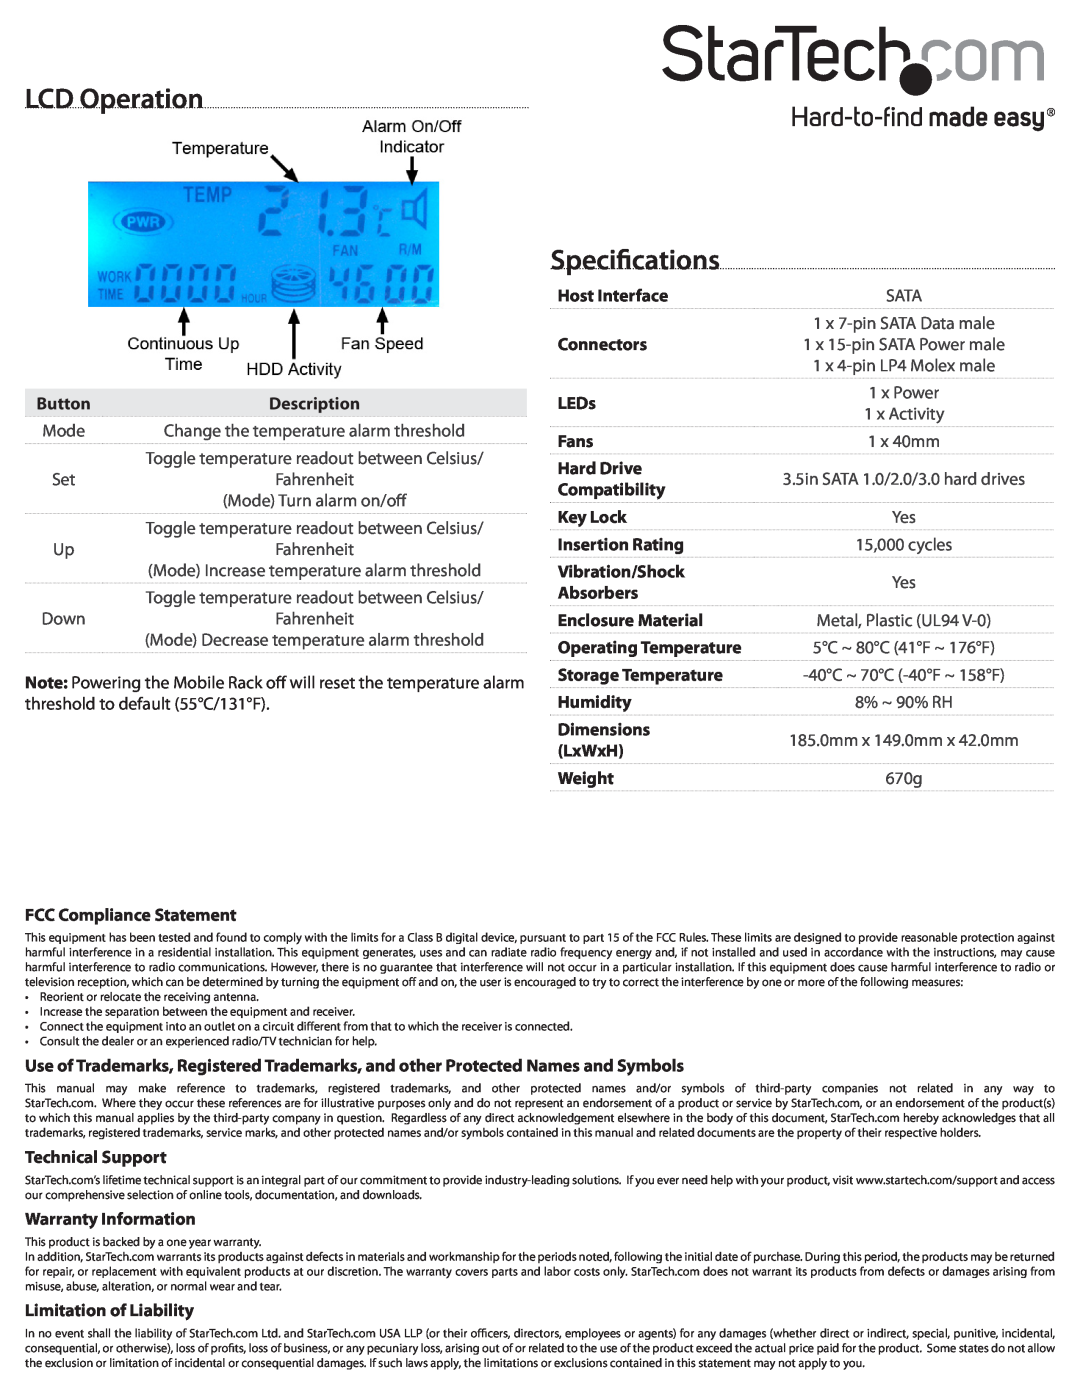 StarTech.com HSB110SATBK LCD Operation, Specifications, Button, Mode, Down, 8% ~ 90% RH 185.0mm x 149.0mm x 42.0mm, Weight 